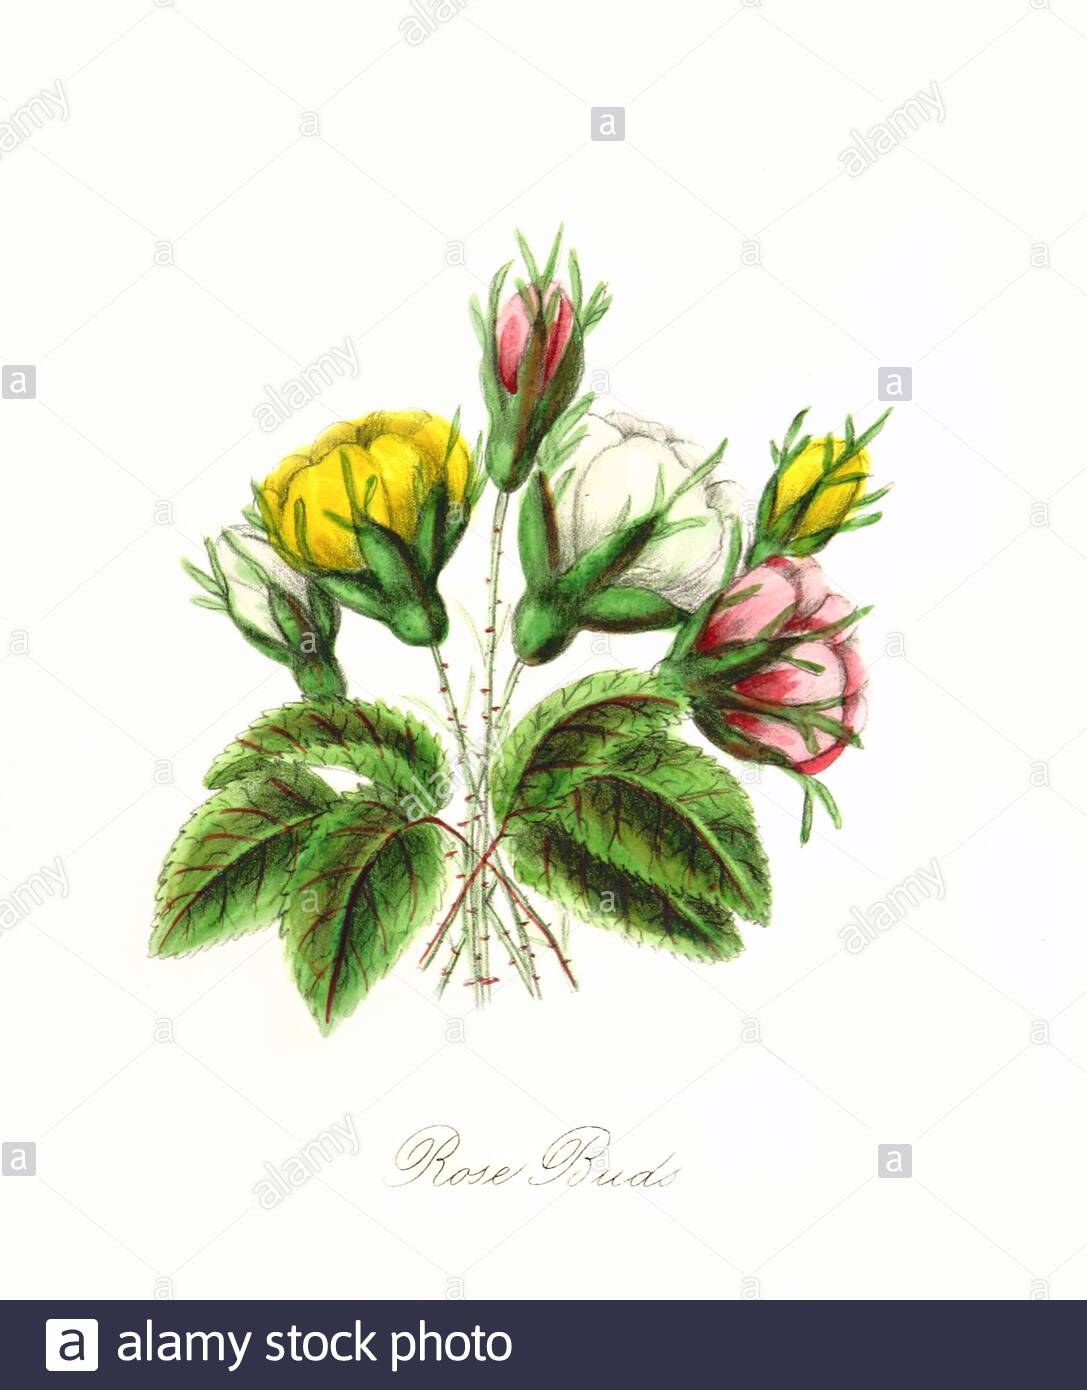 Rose Buds (Rosa), vintage botanical illustration from 1865 Stock Photo